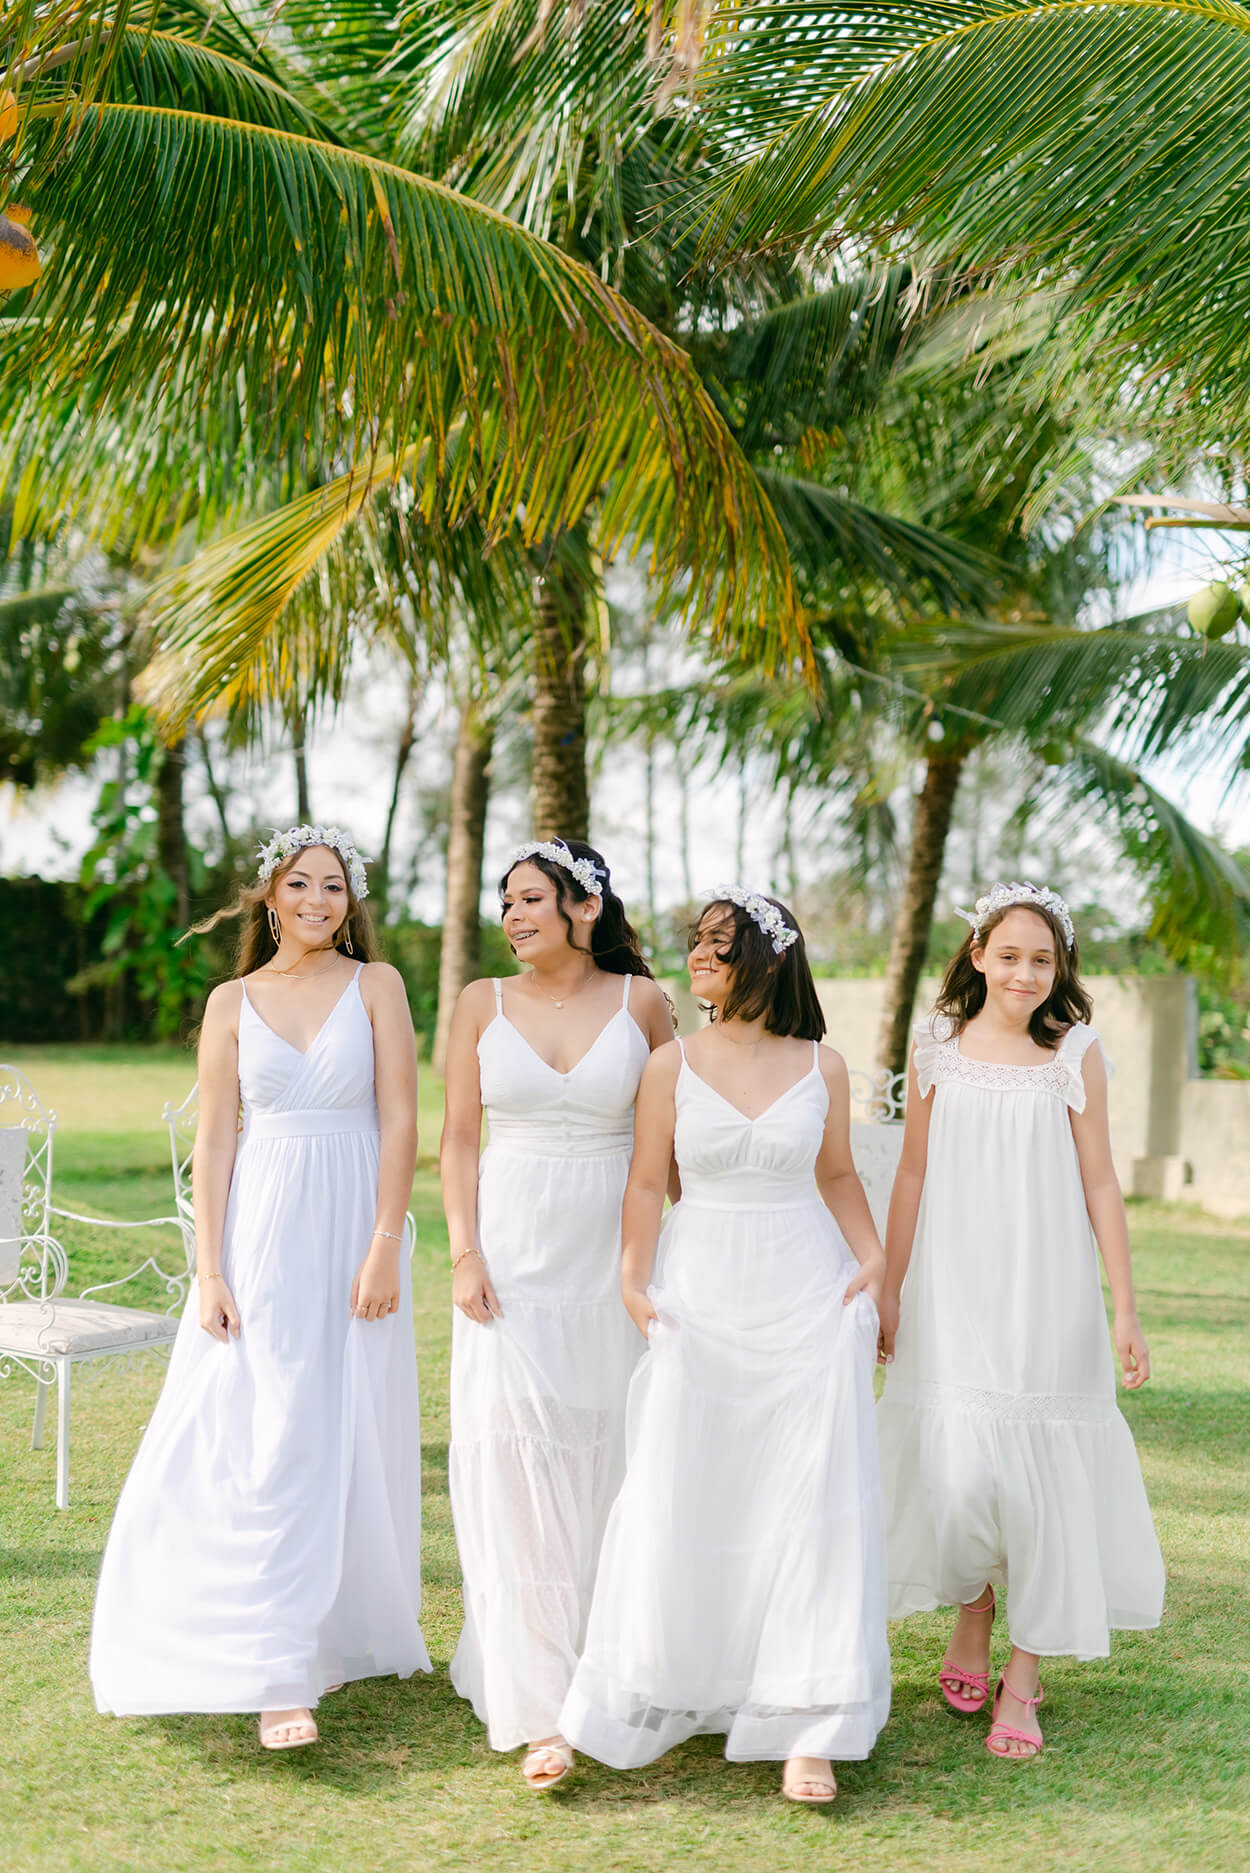 Quatro demoiselles com vestidos longos brancos e coroa de flores